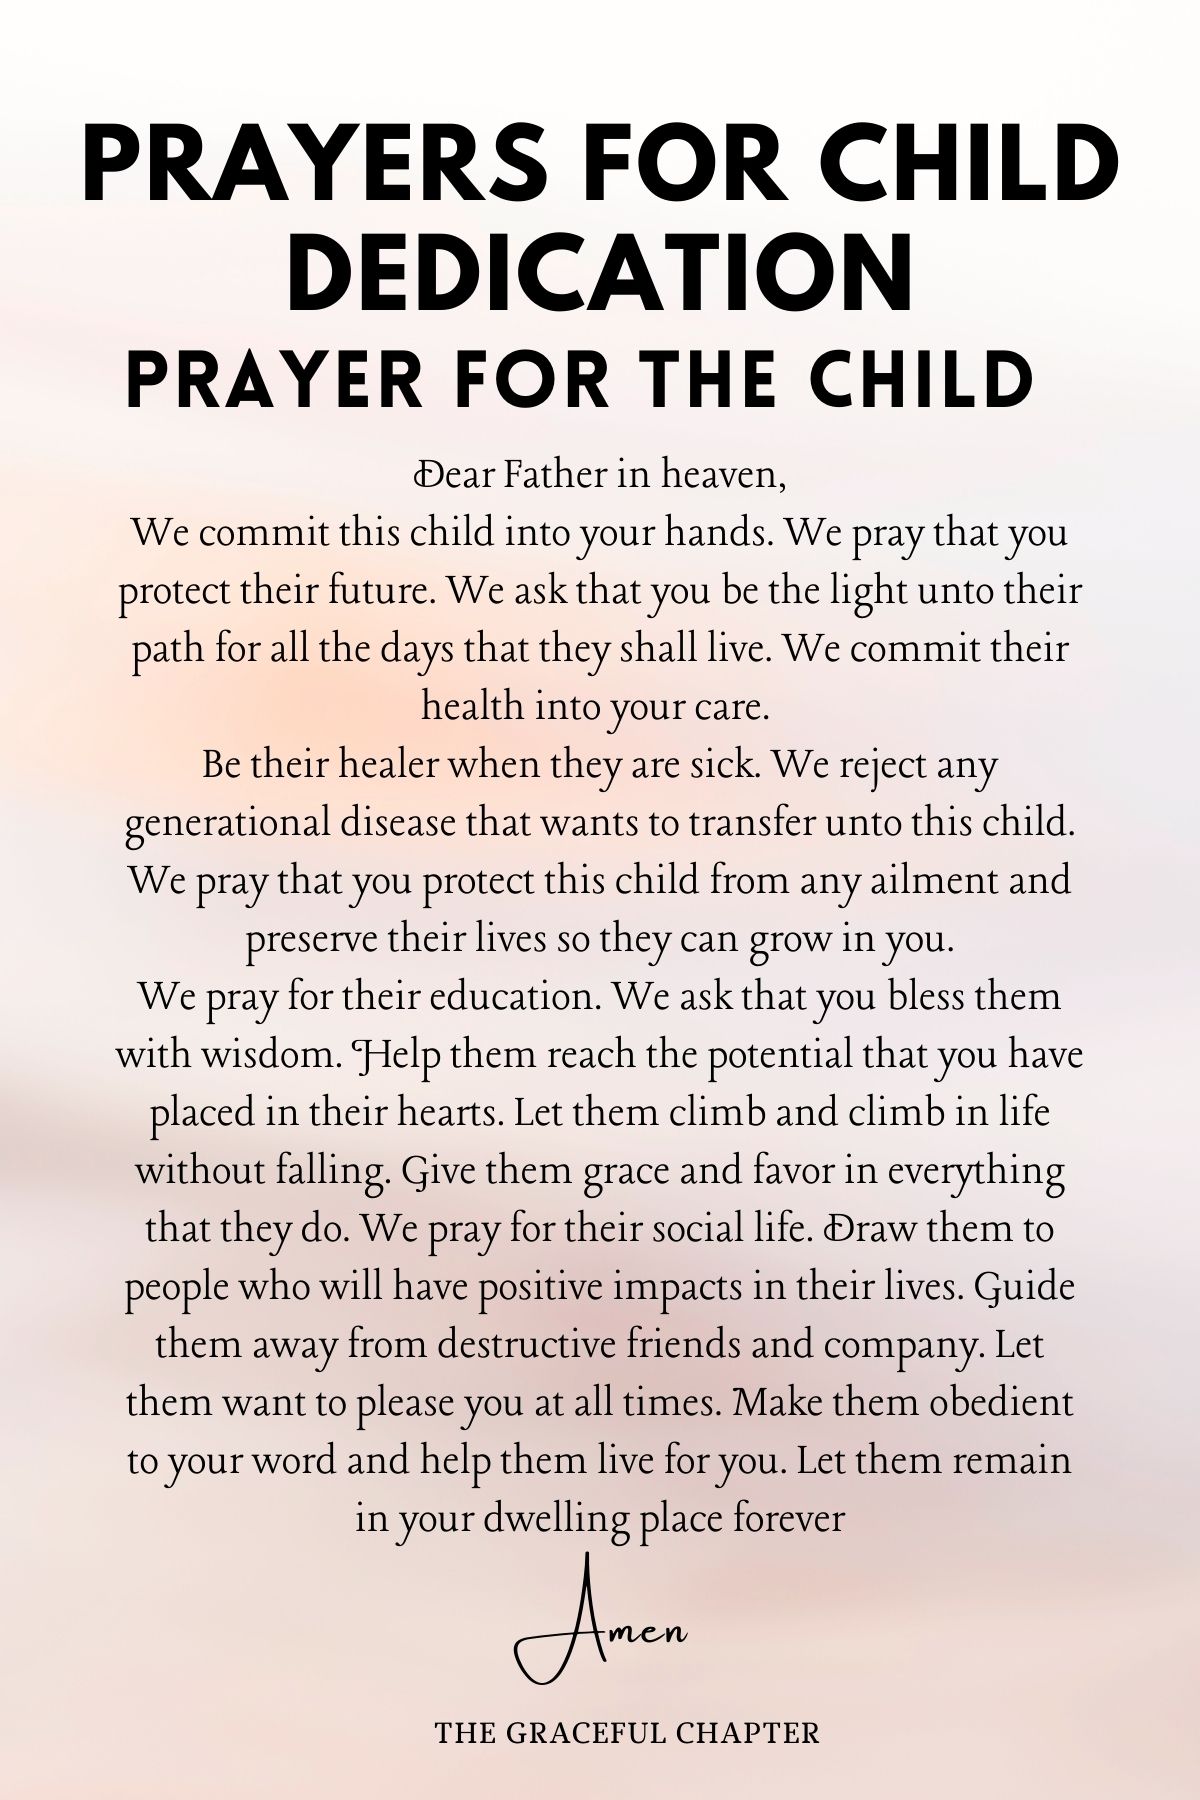 prayers for child dedication - Prayer for the Child